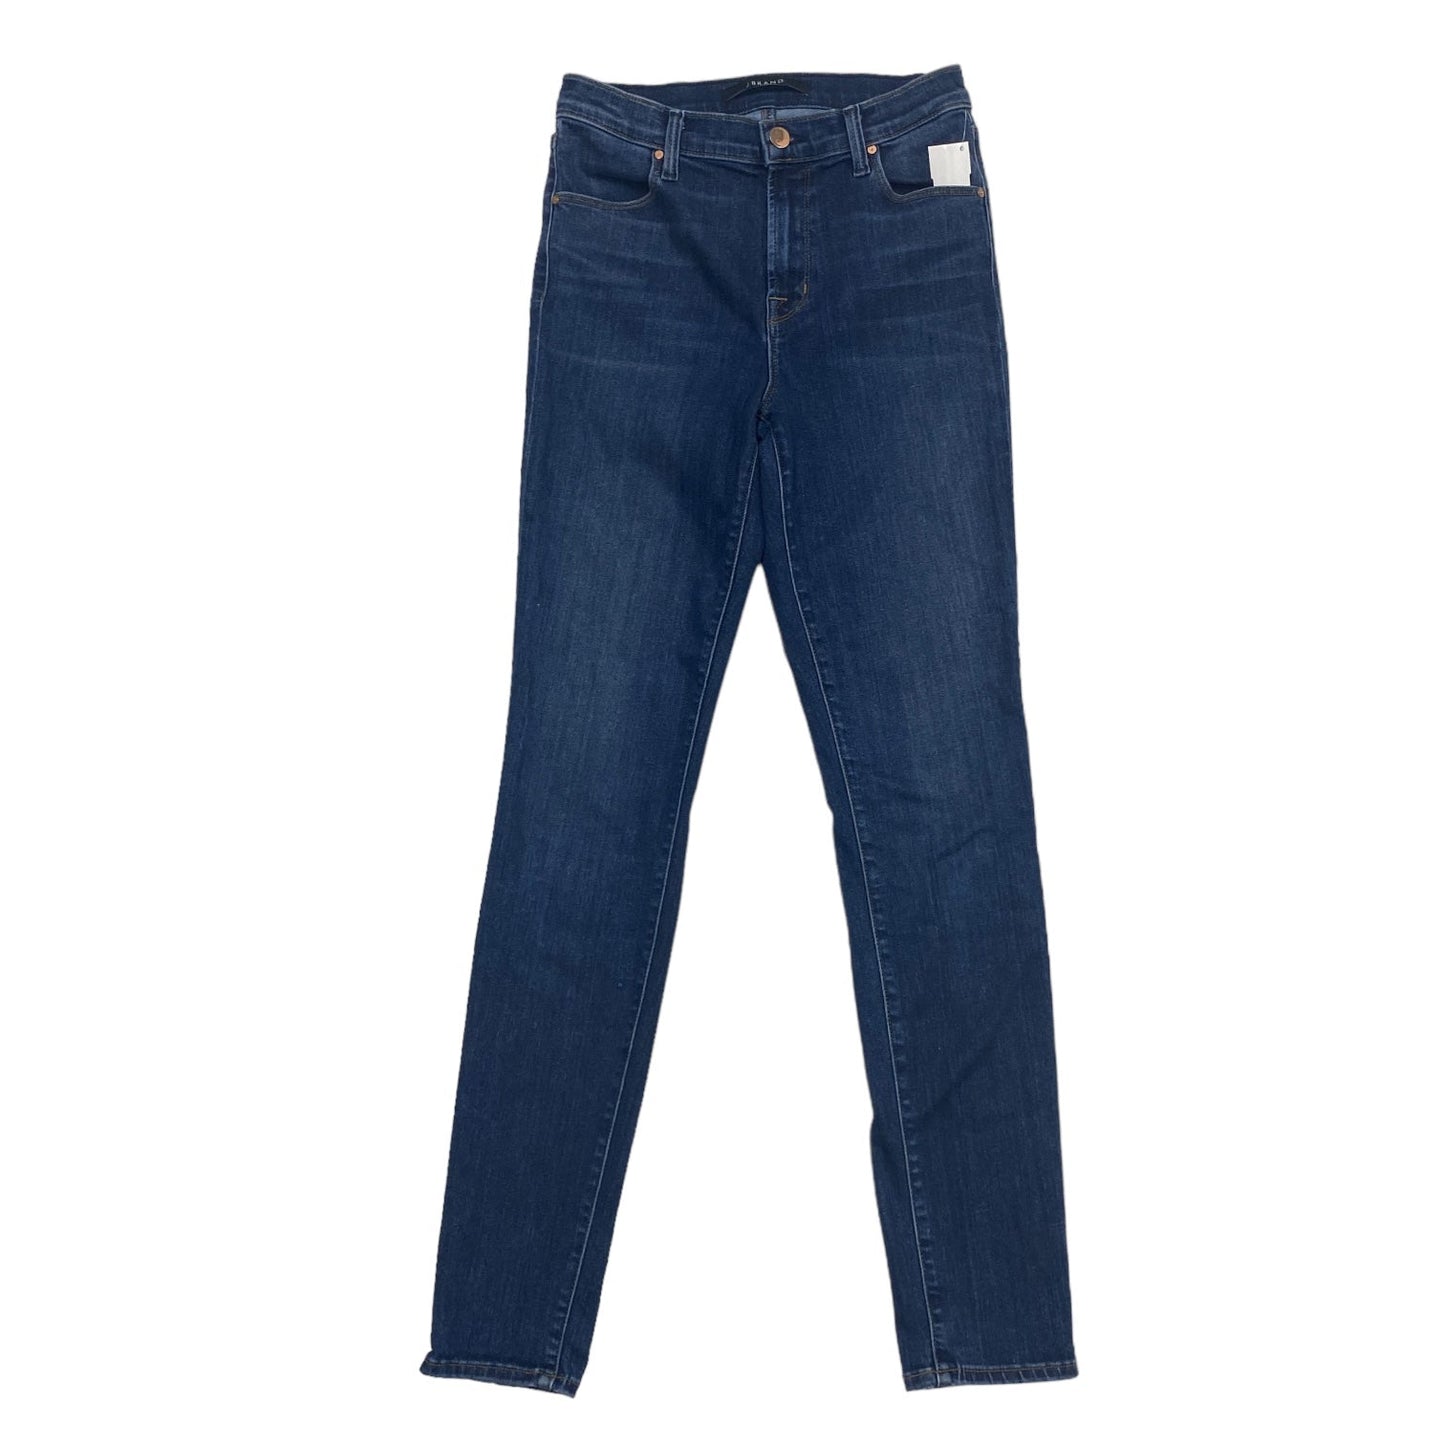 Blue Denim Jeans Skinny J Brand, Size 6